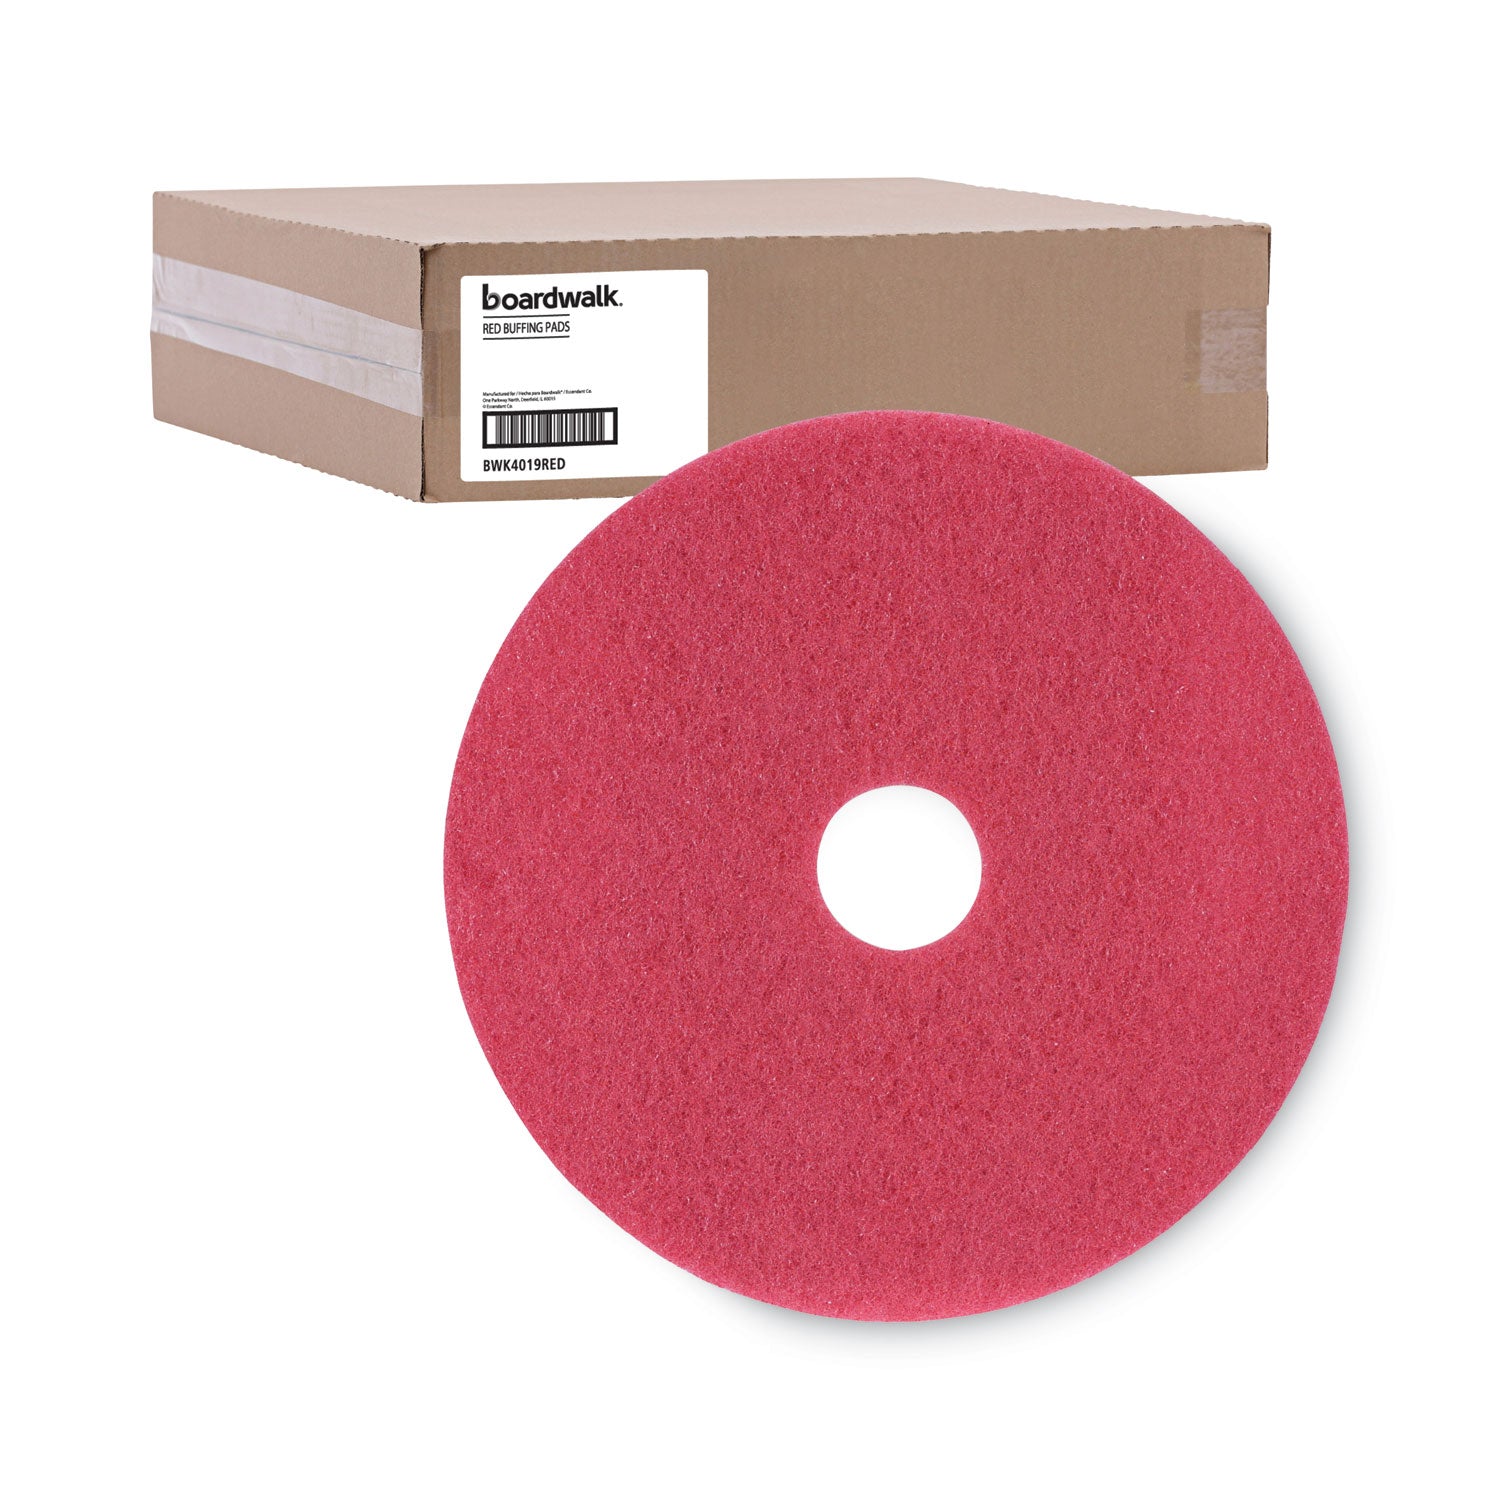 buffing-floor-pads-19-diameter-red-5-carton_bwk4019red - 5